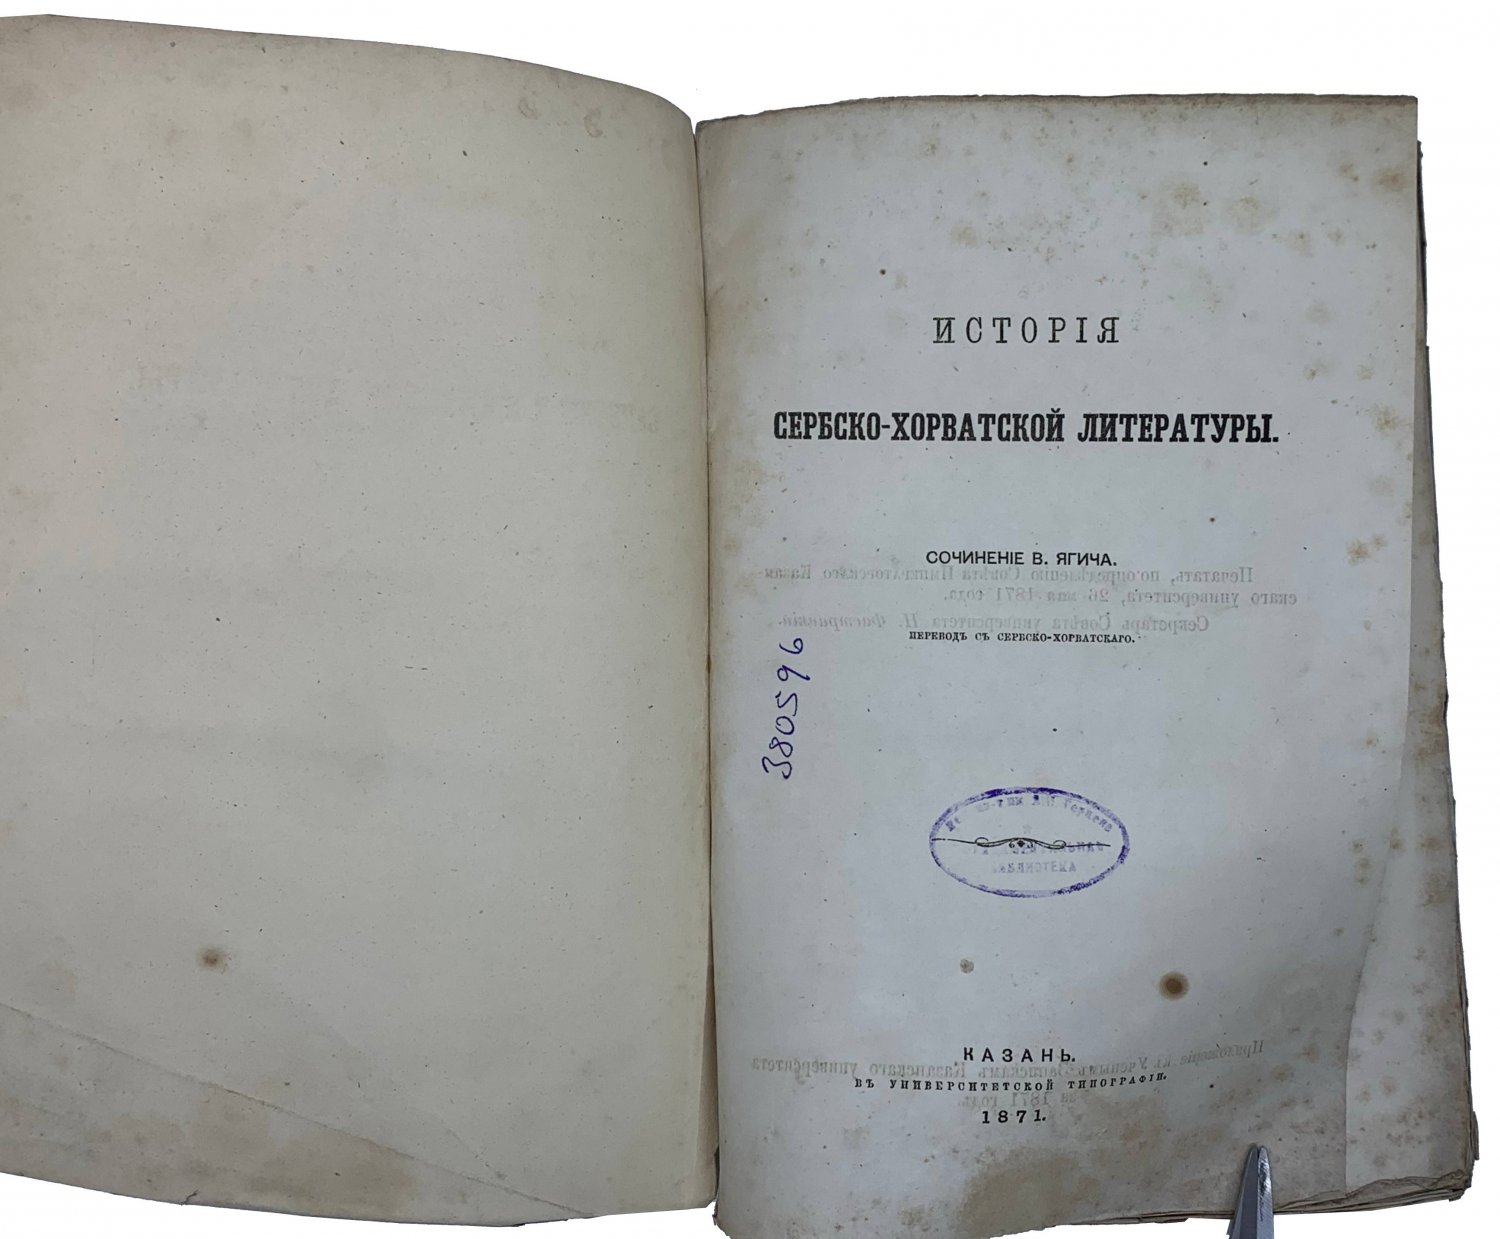 Yagich V. History of Serbian-Croatian literature. 1871 245 p.